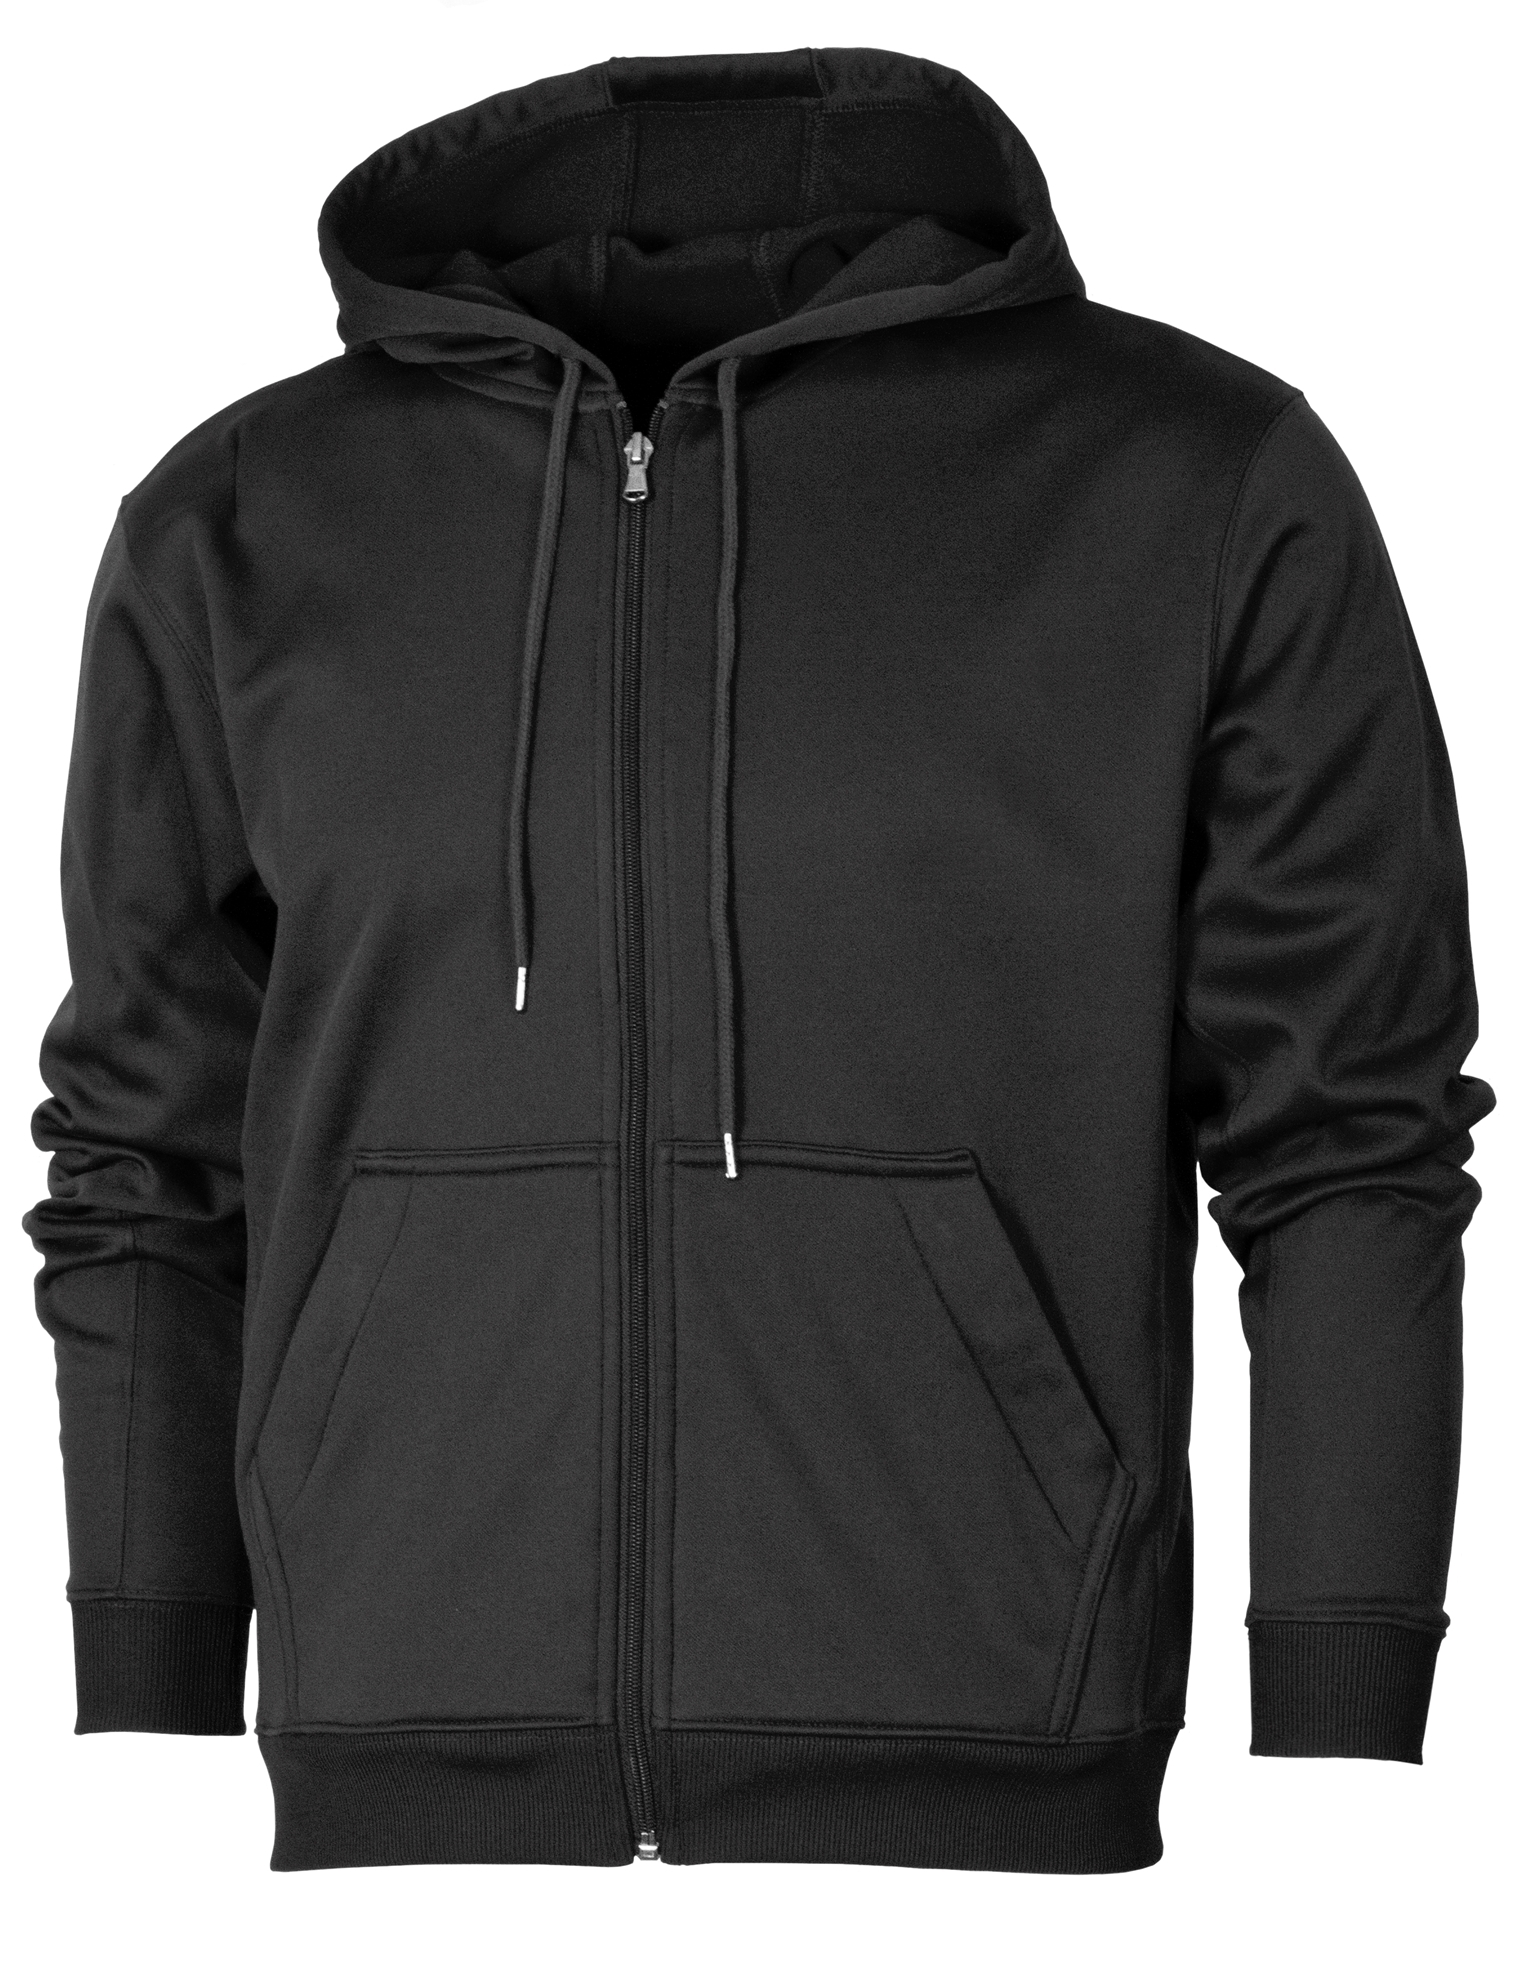 BAW Athletic Wear F160 - Adult Dry-Tek Full Zip Sweatshirt